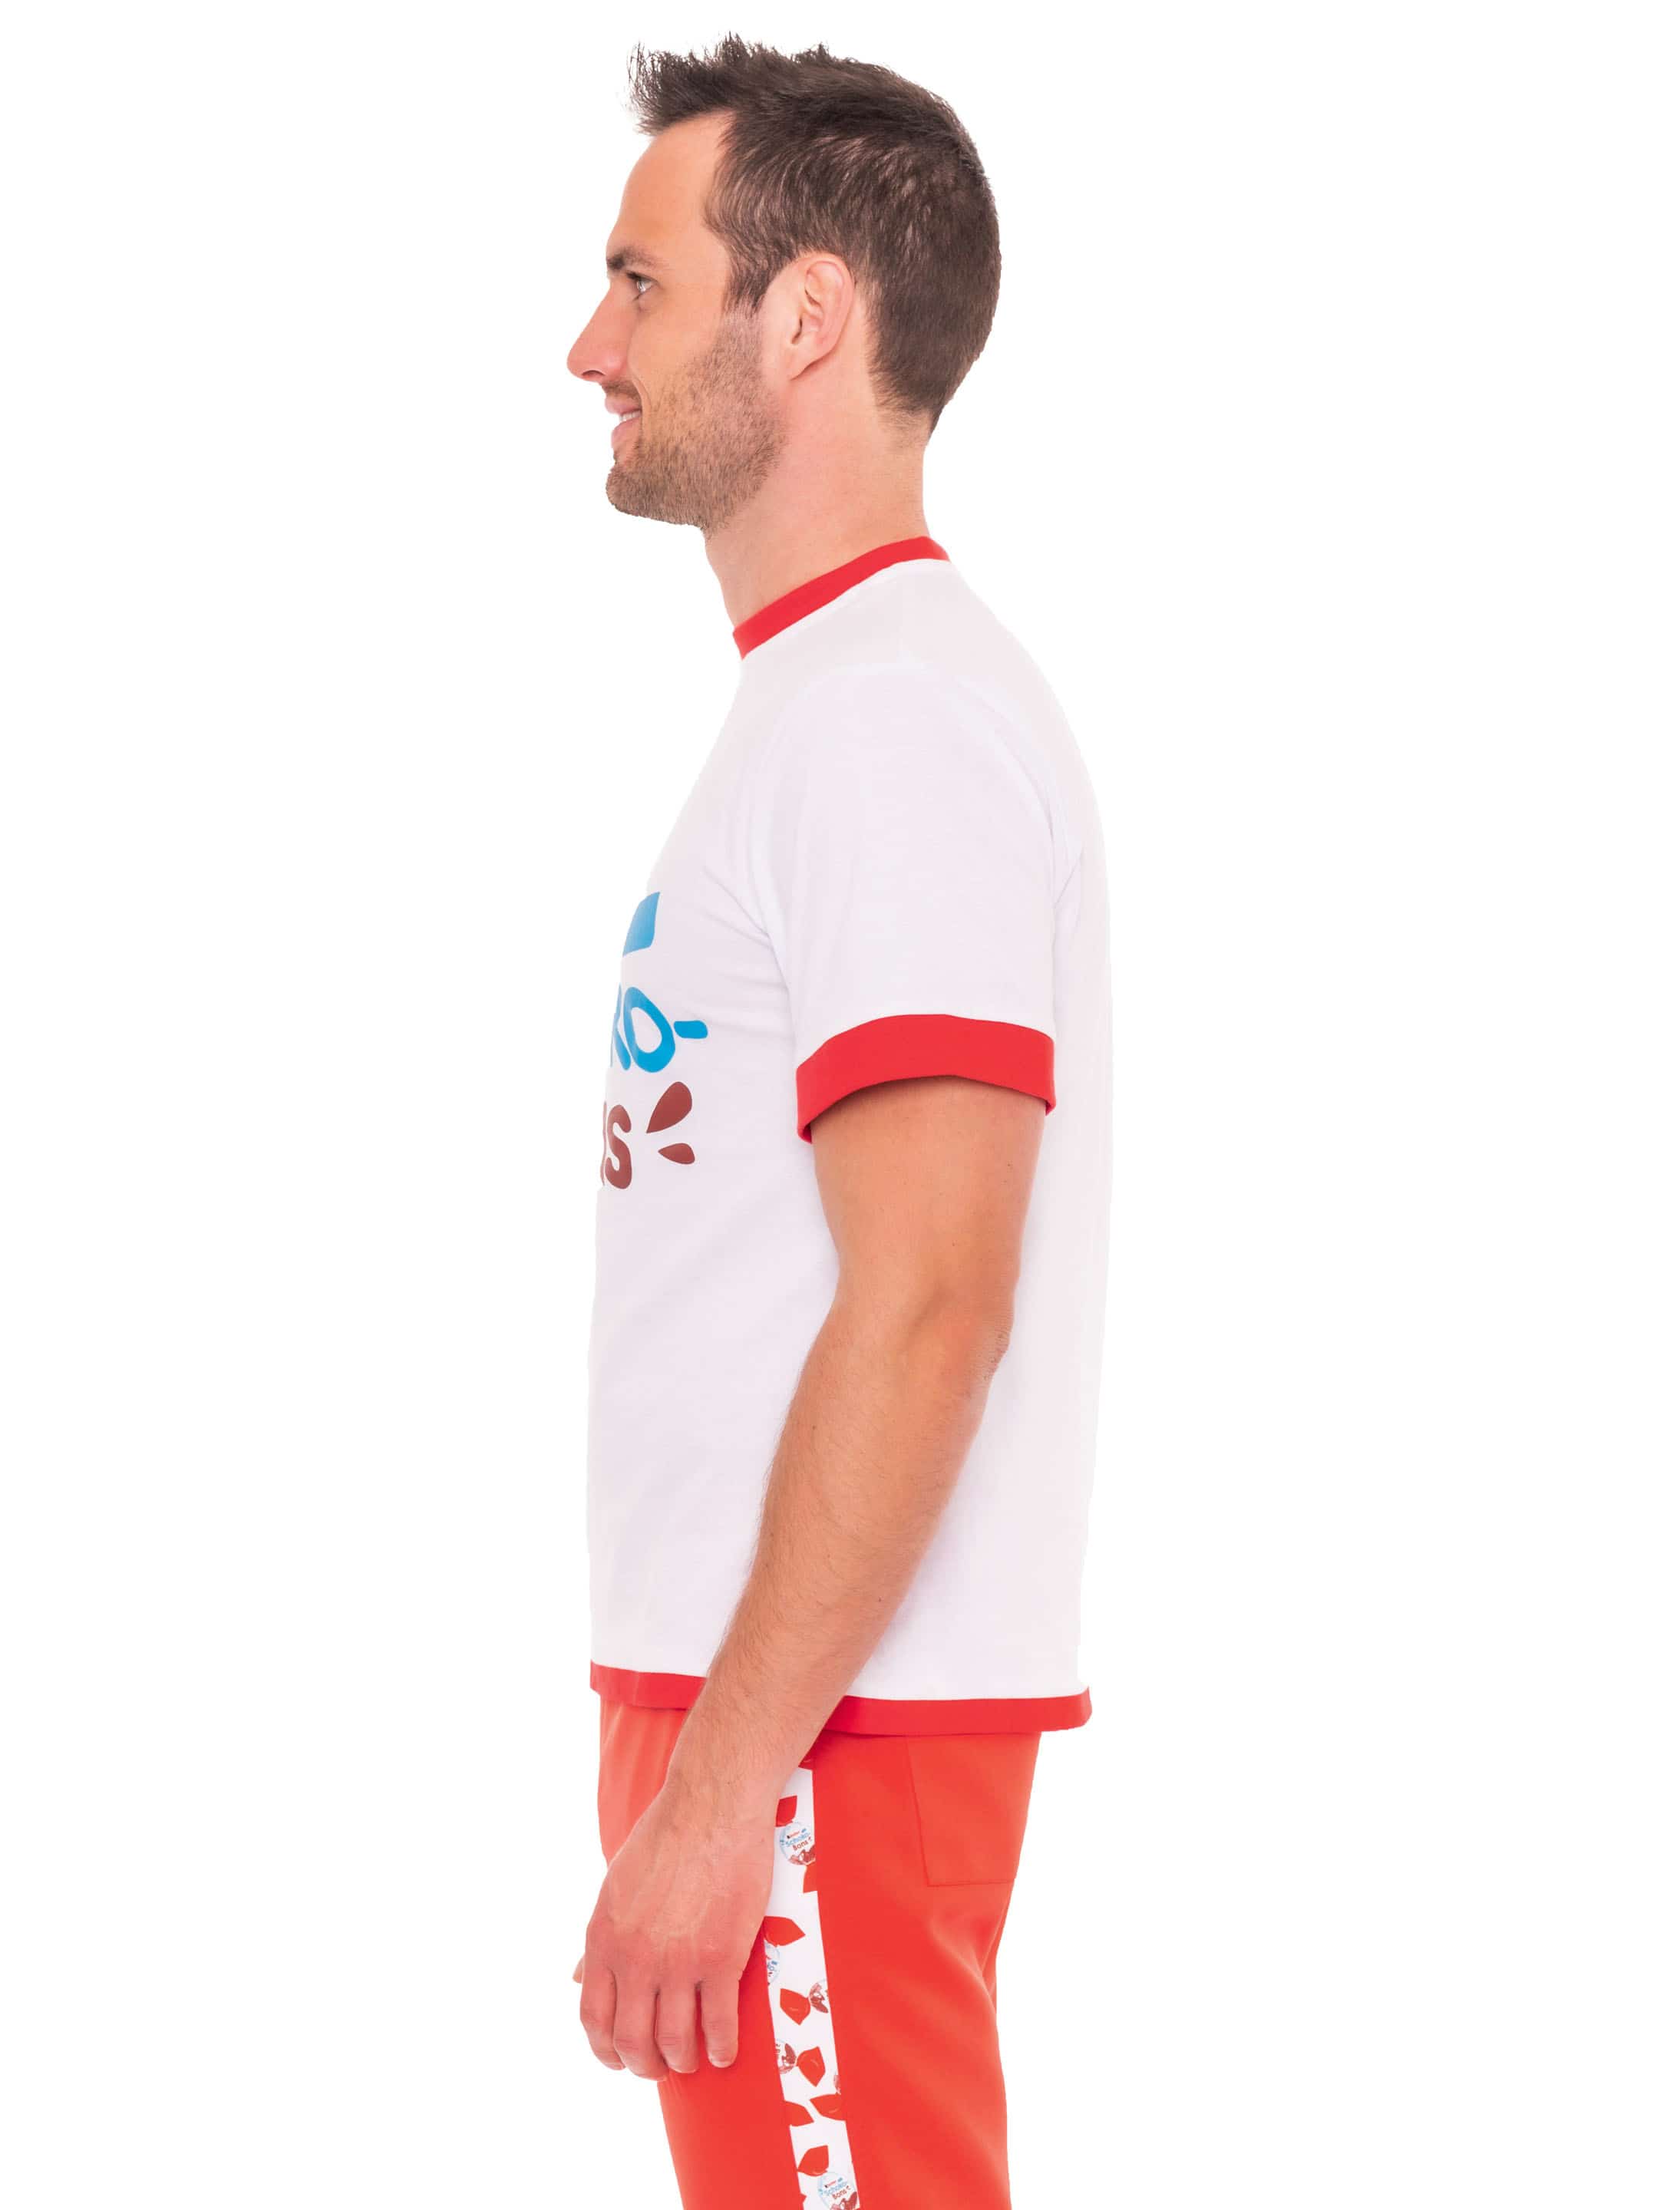 T-Shirt kinder Schoko-Bons Herren rot/weiß 4XL